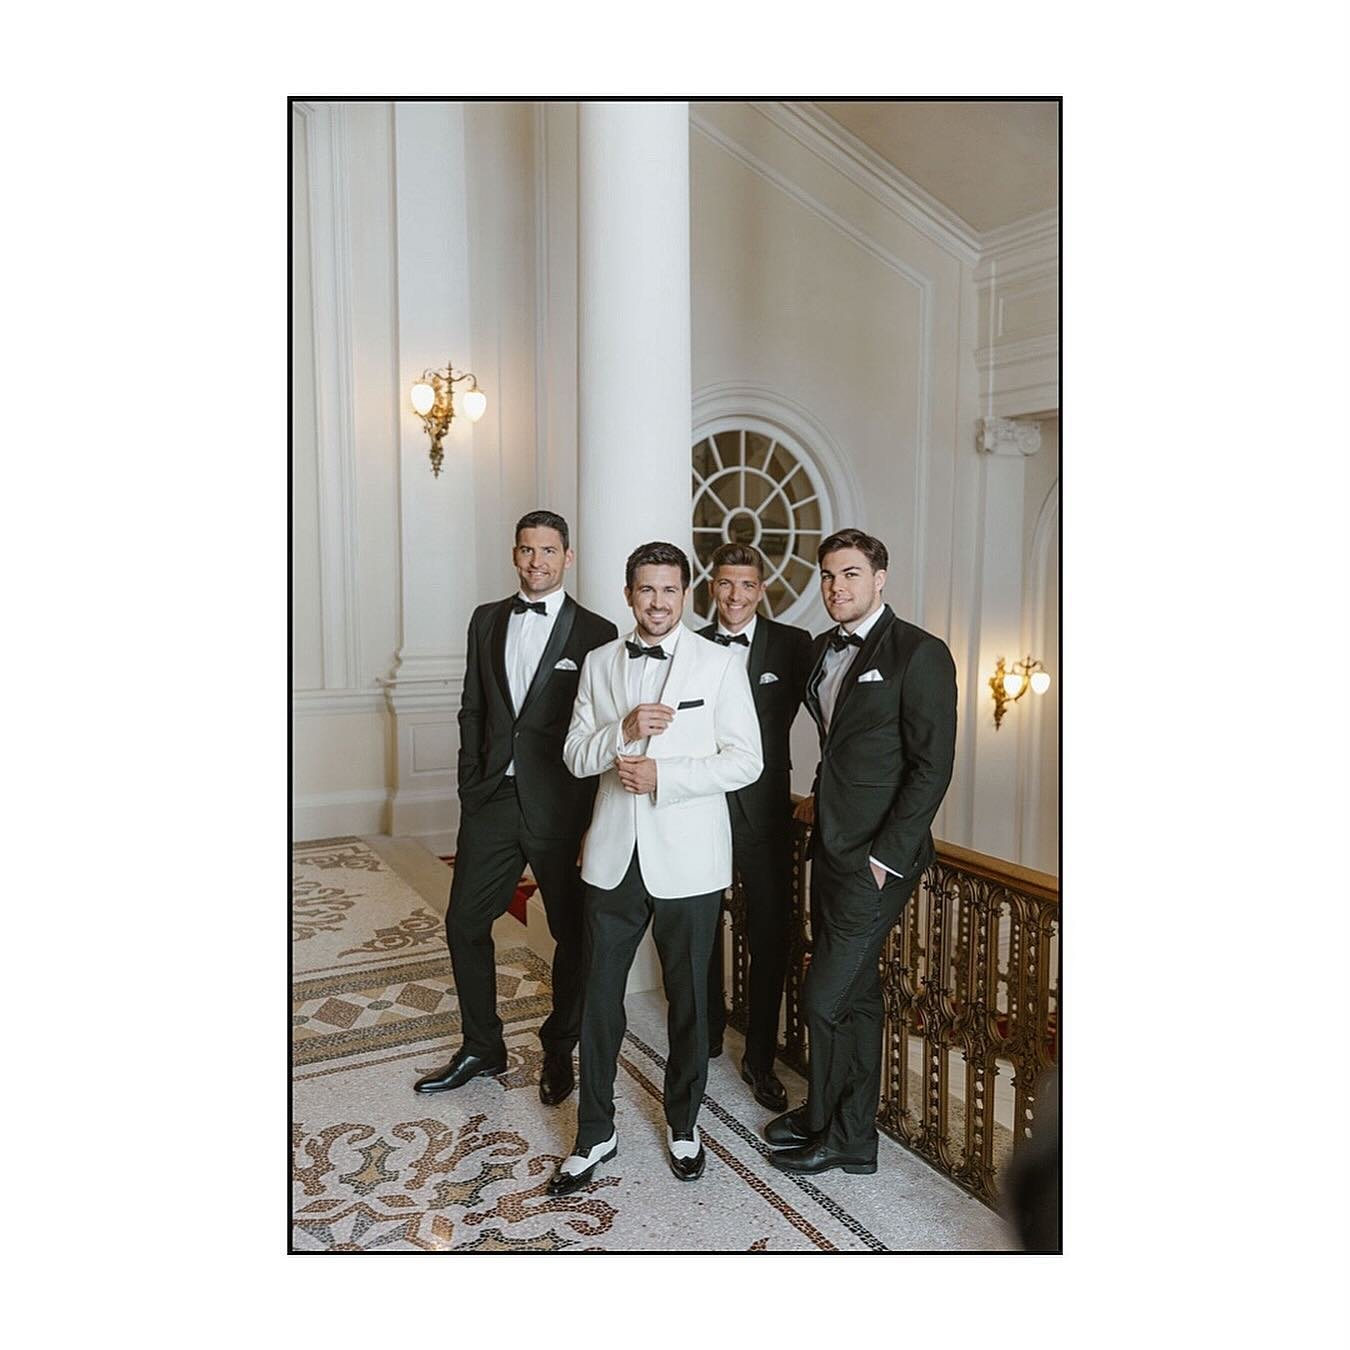 THE BOYS ARE READY ✨🤌🏻🤵🏻&zwj;♂️
.
.
.
.
.
.

CONCEPT &amp; PLANNING:  @janavoglauer @mitdirzuzweit_eventplaner
MODELS: @thomasmora_ 
HAIR &amp; MAKE UP: @mario.kren.wedding 
GROOM SUIT: @generation_elegant_verleih

#weddingphotography #hochzeitsf